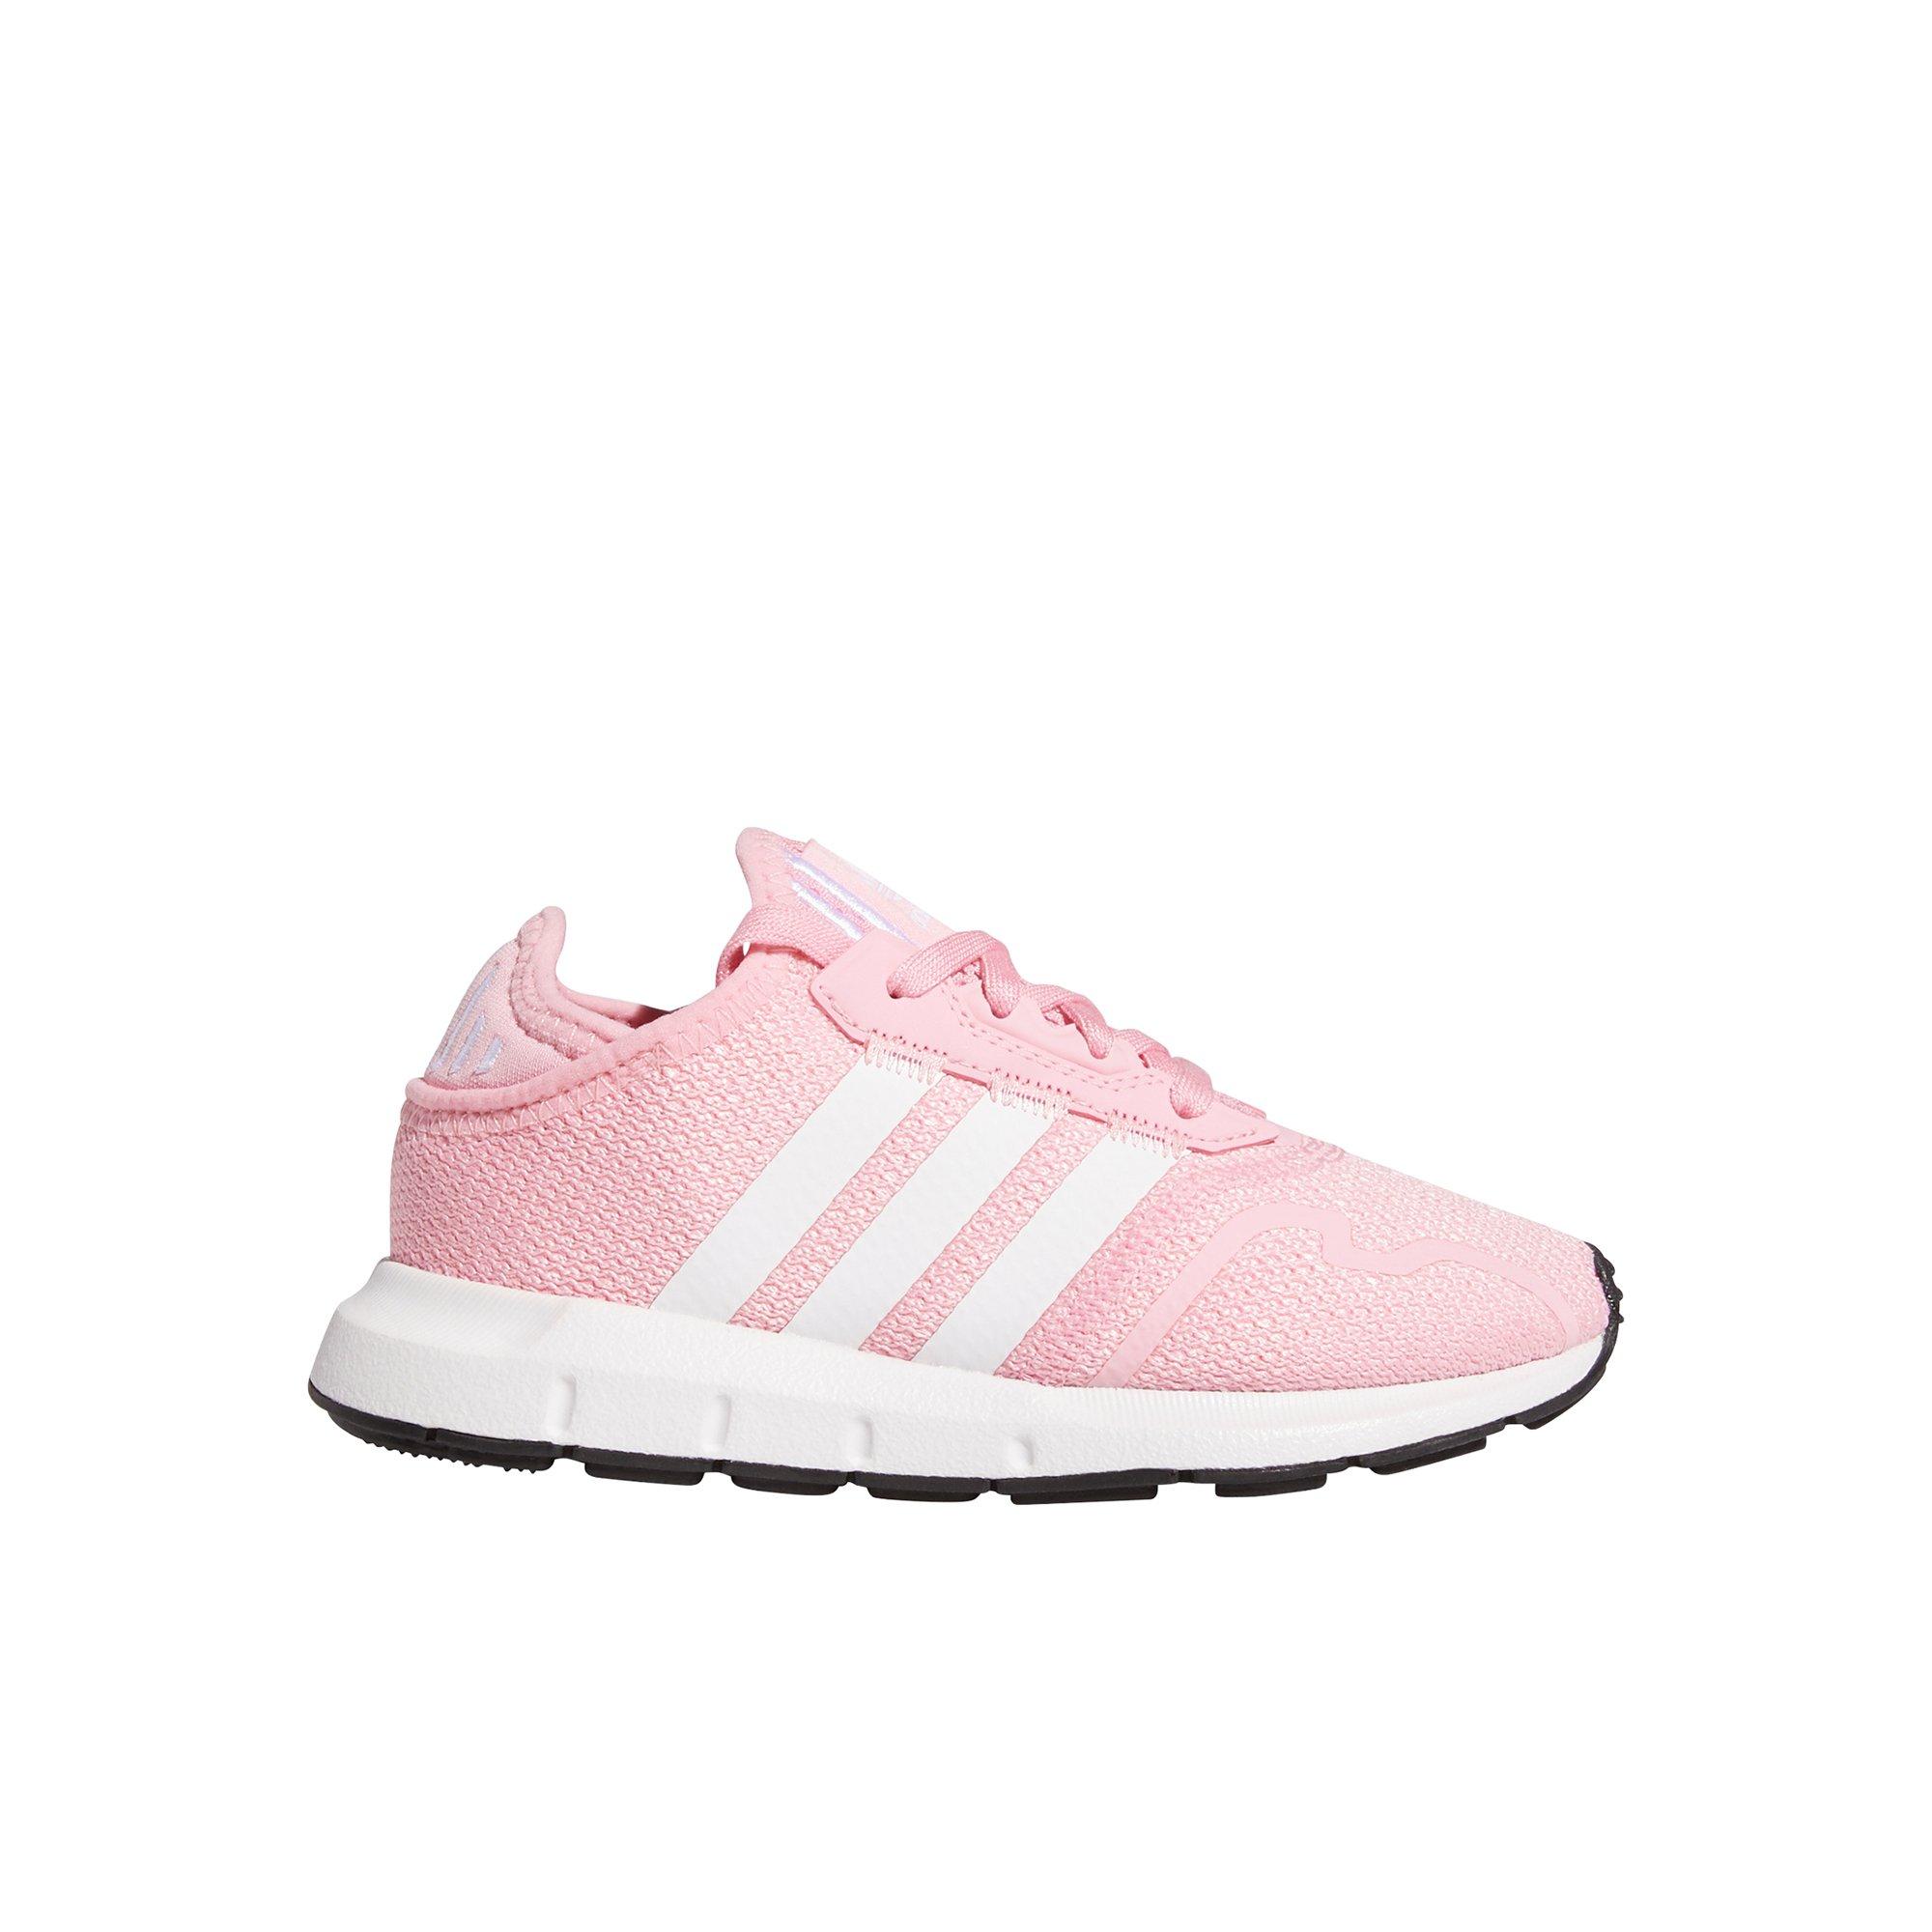 swift run pink adidas